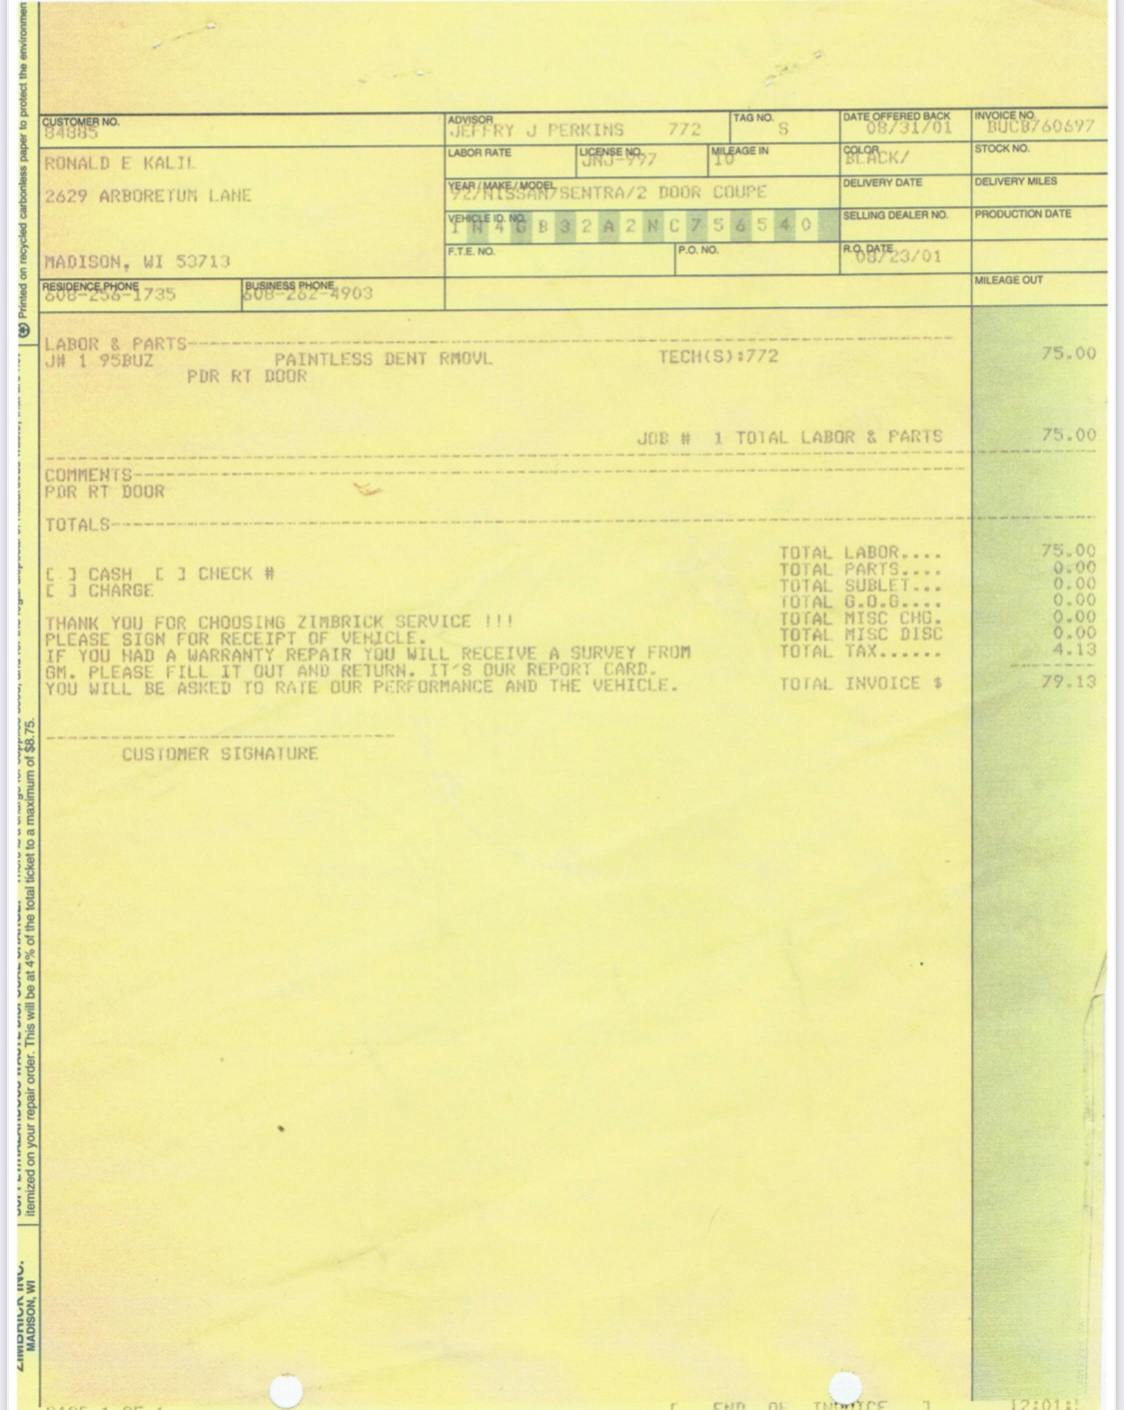 1992 Nissan Sentra SE-R paperwork